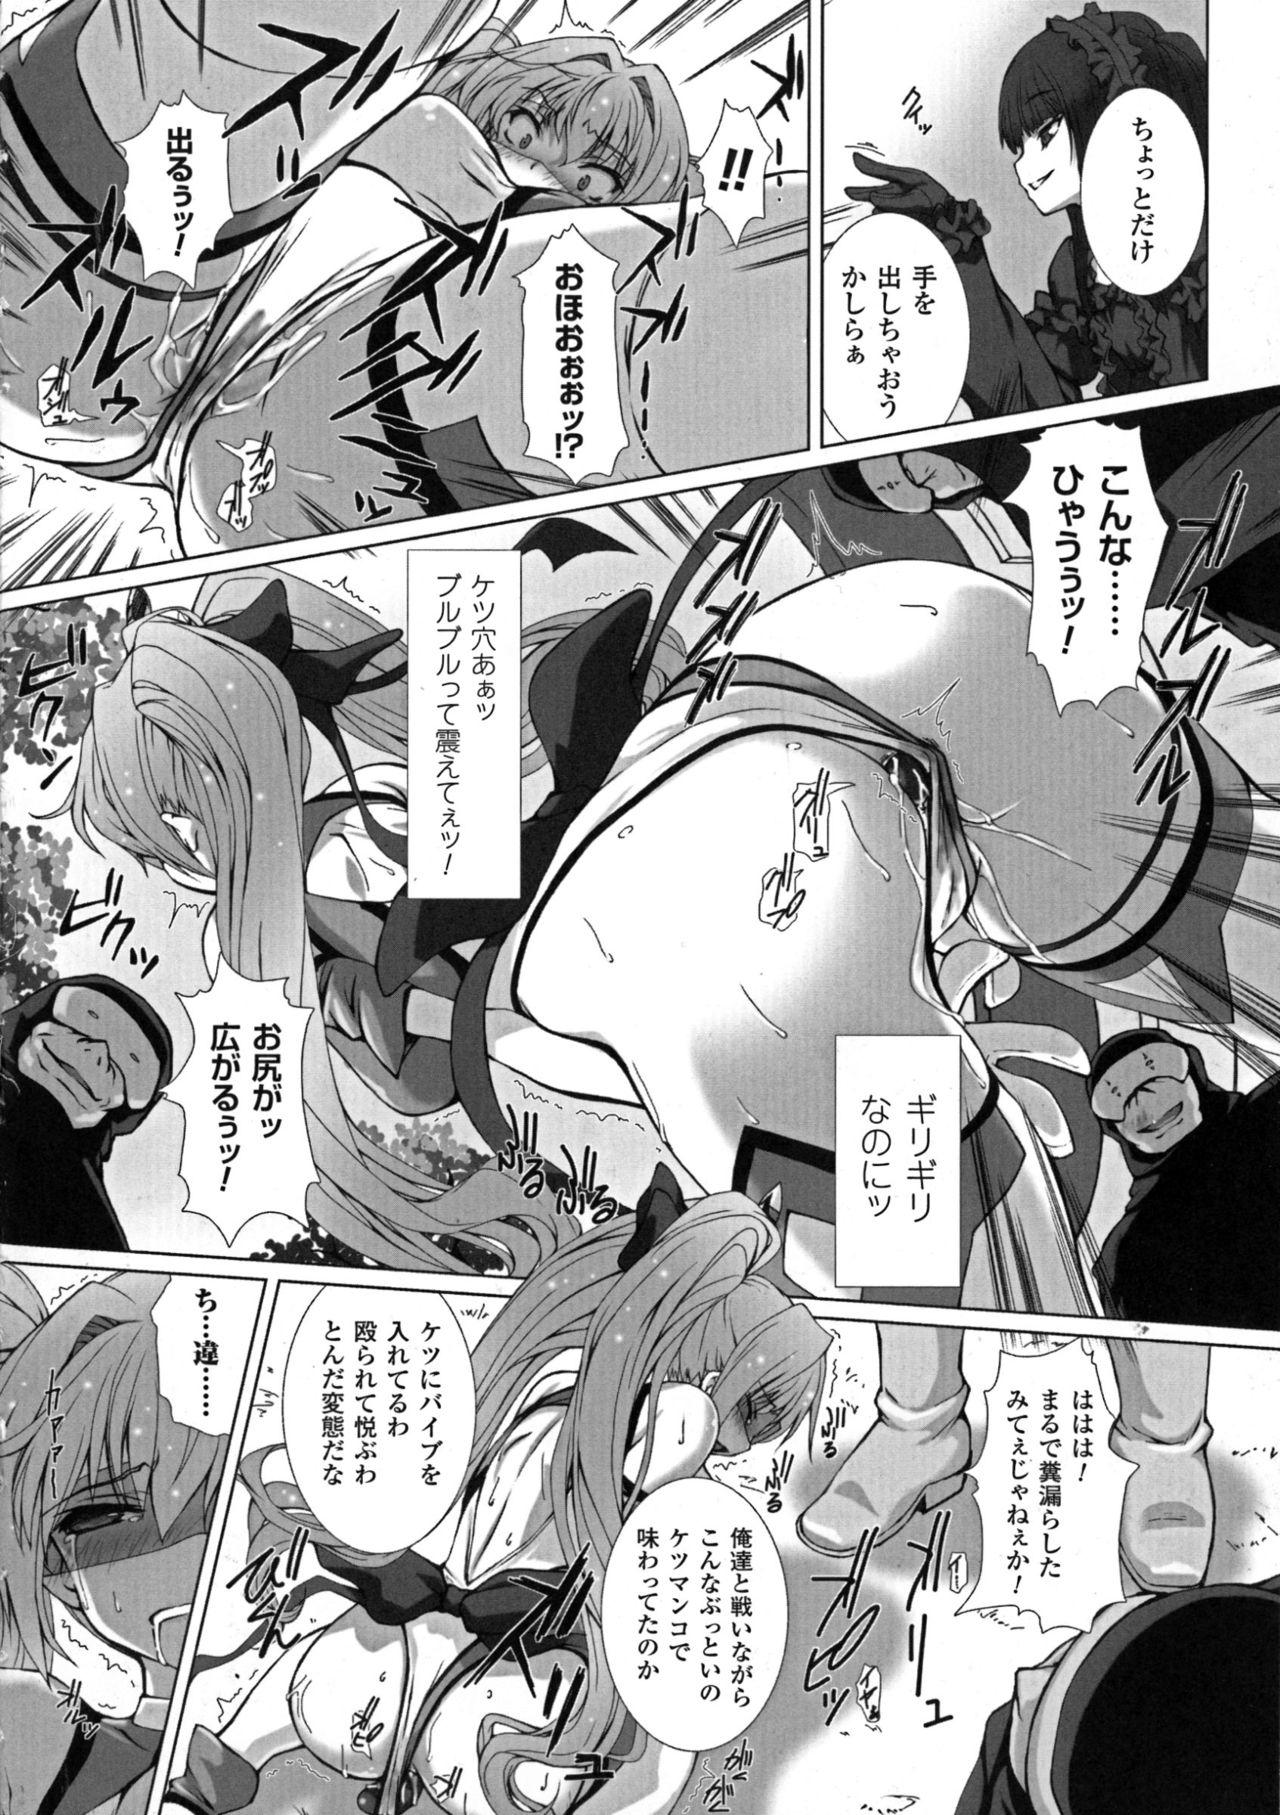 Seigi no Heroine Kangoku File DX vol. 6 17